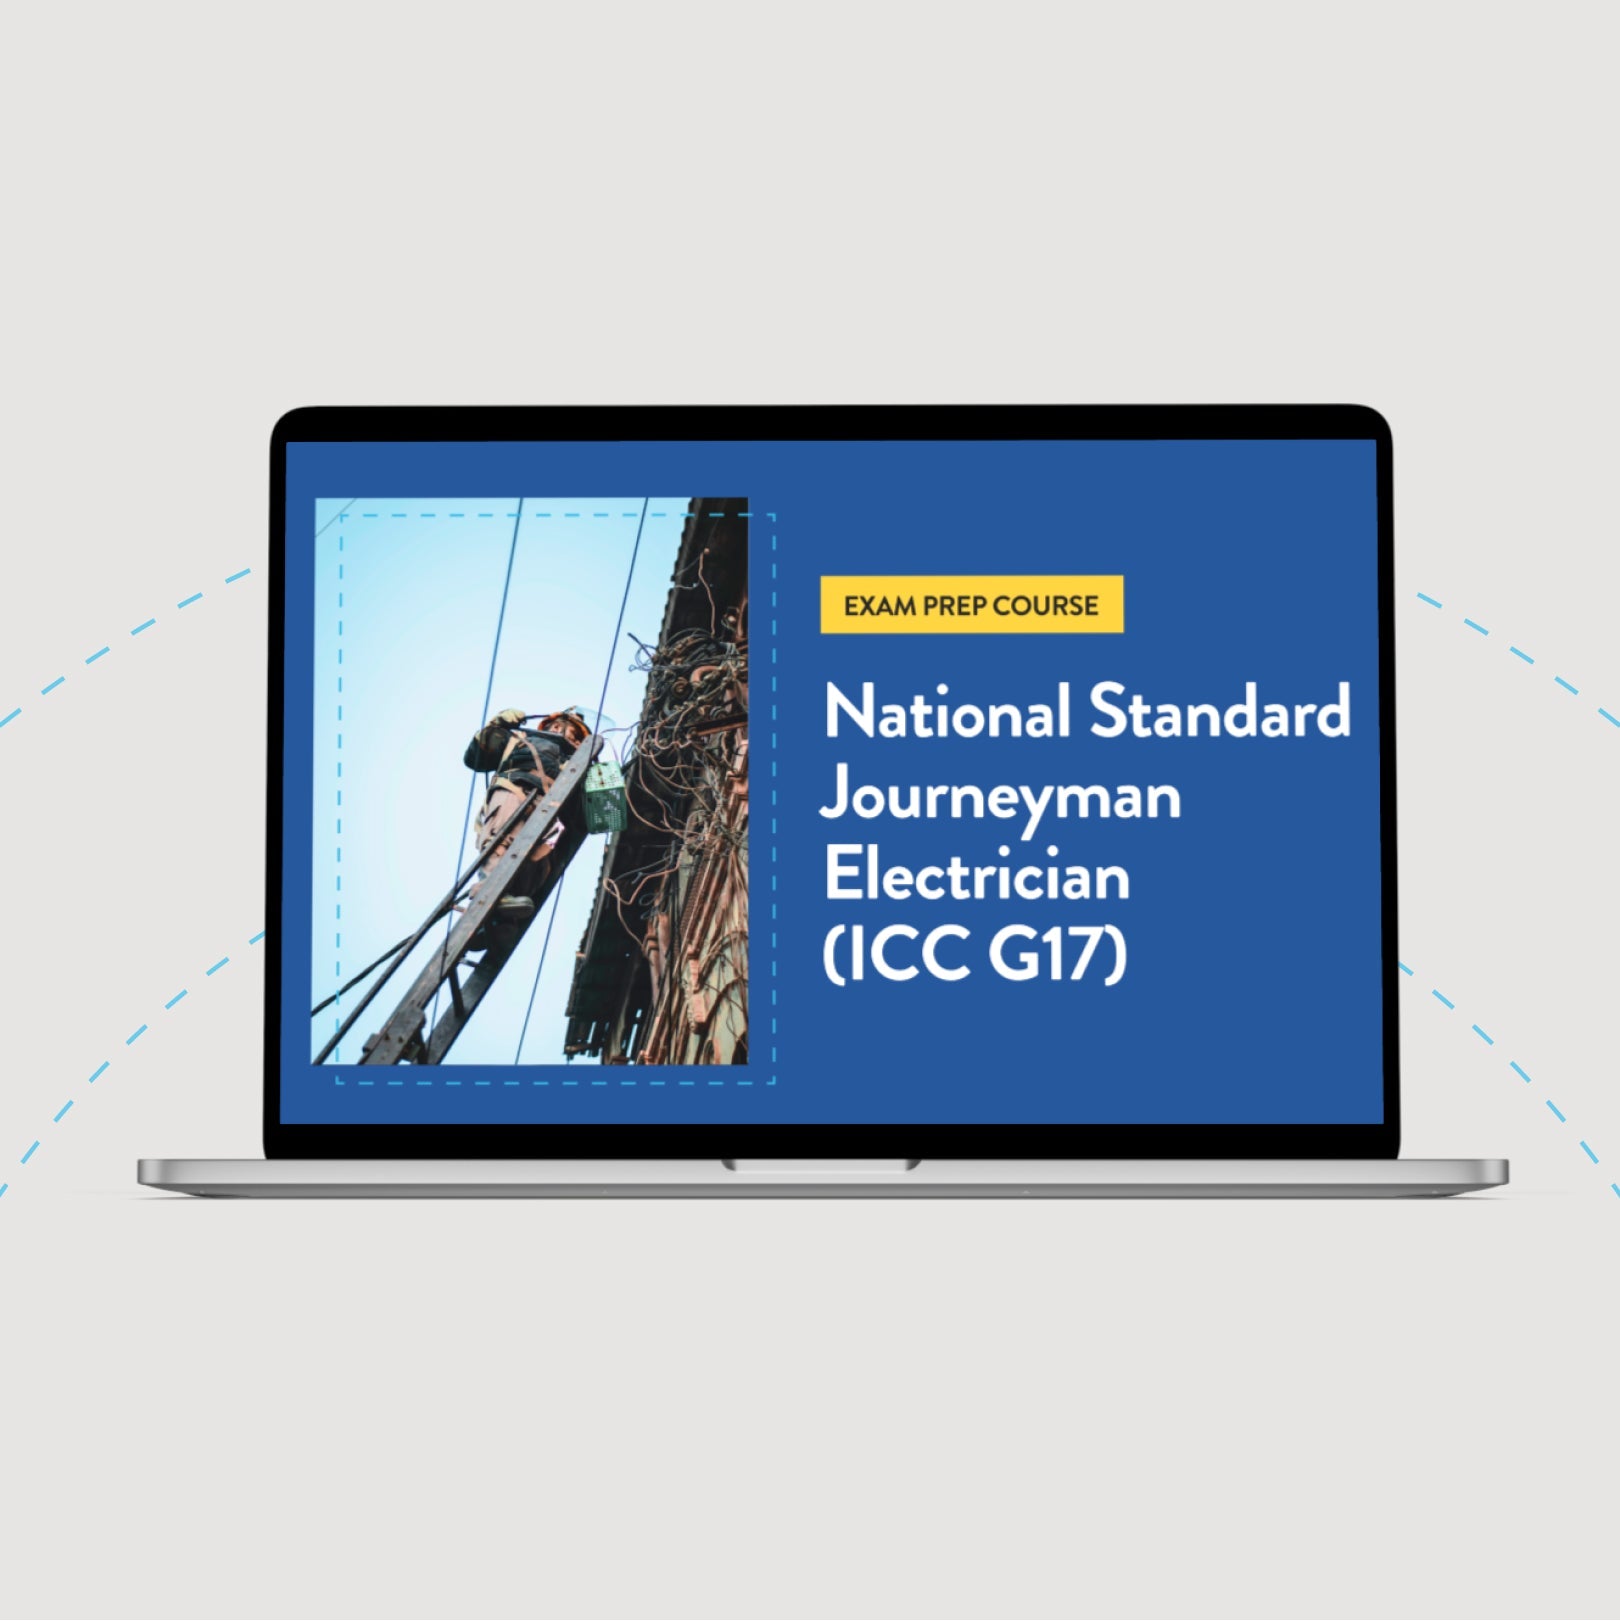 National Standard Journeyman Electrician (ICC G17) Exam Prep Course